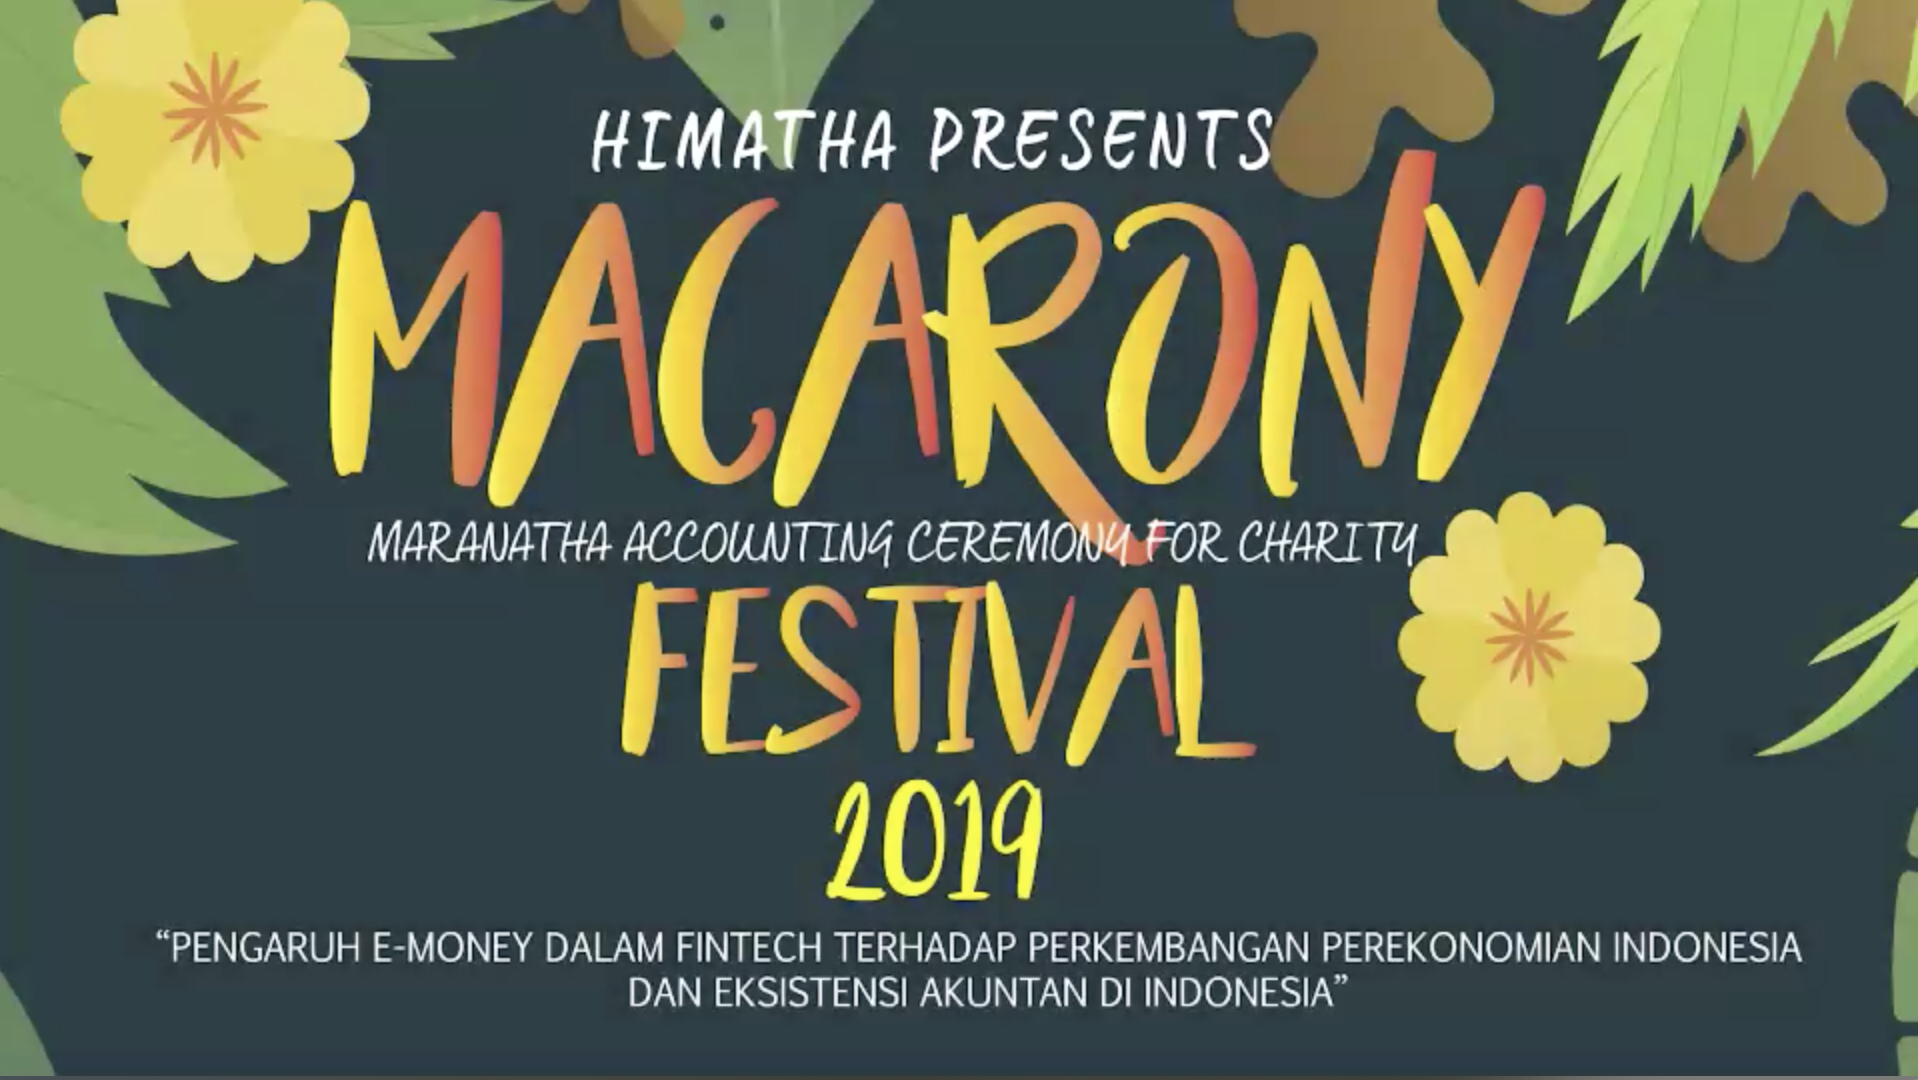 Macaroni Festival Maranatha News